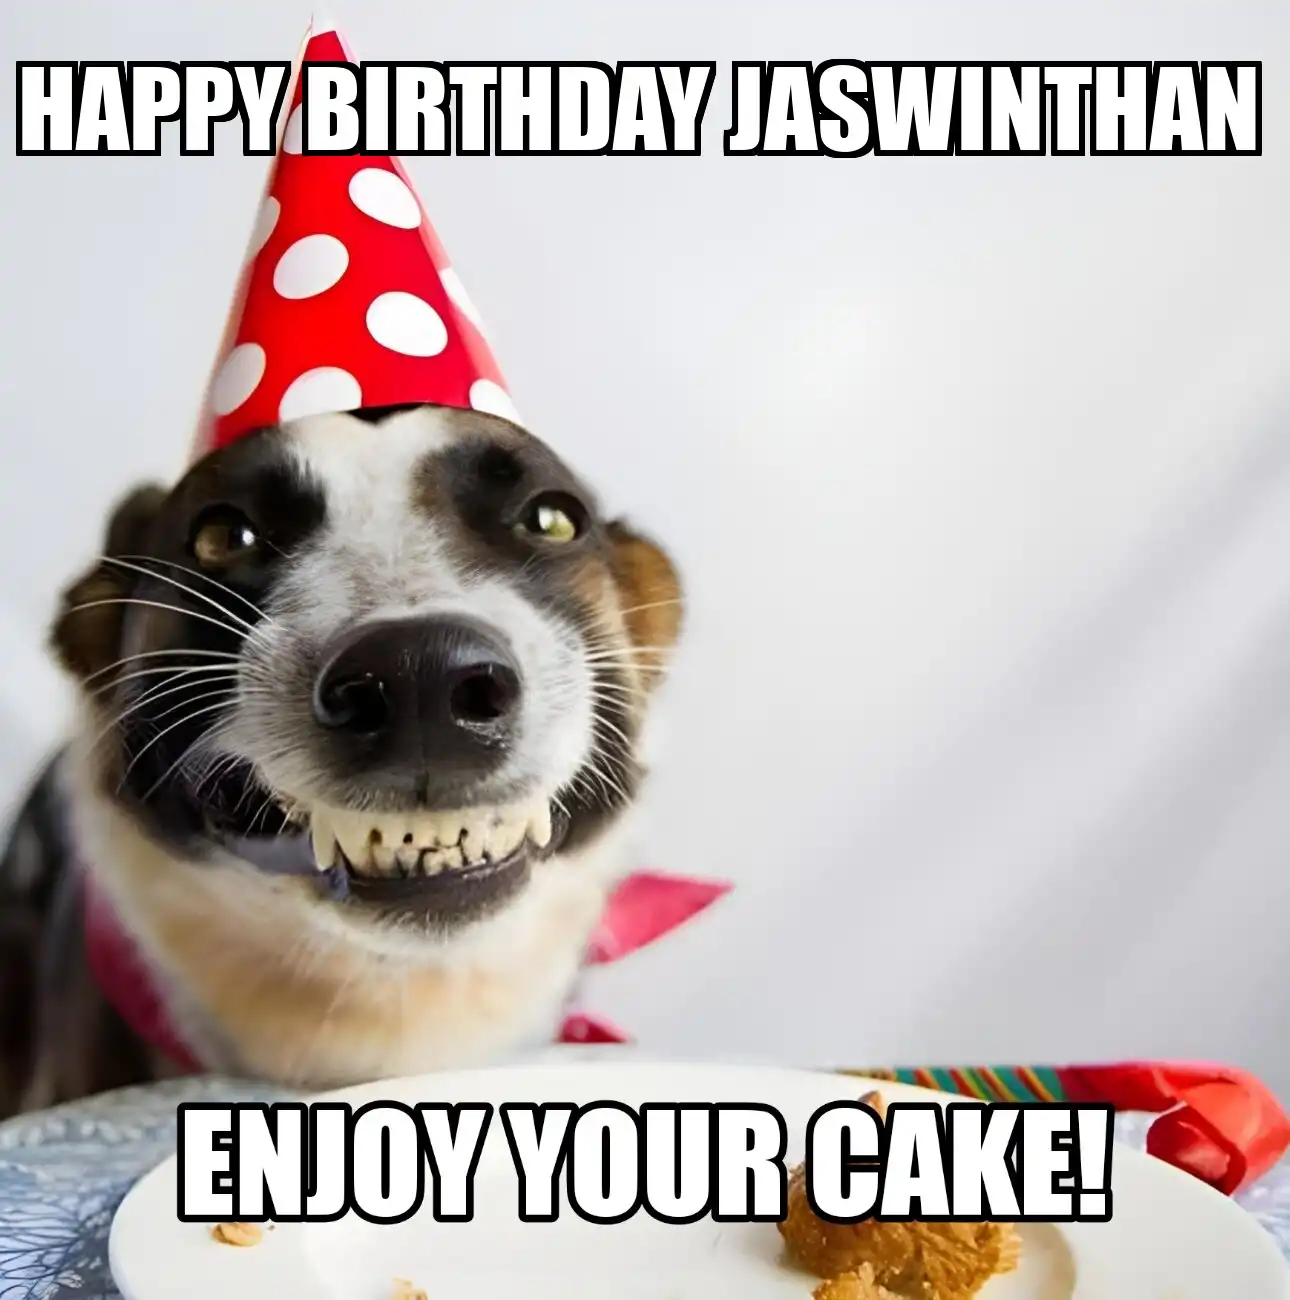 Happy Birthday Jaswinthan Enjoy Your Cake Dog Meme